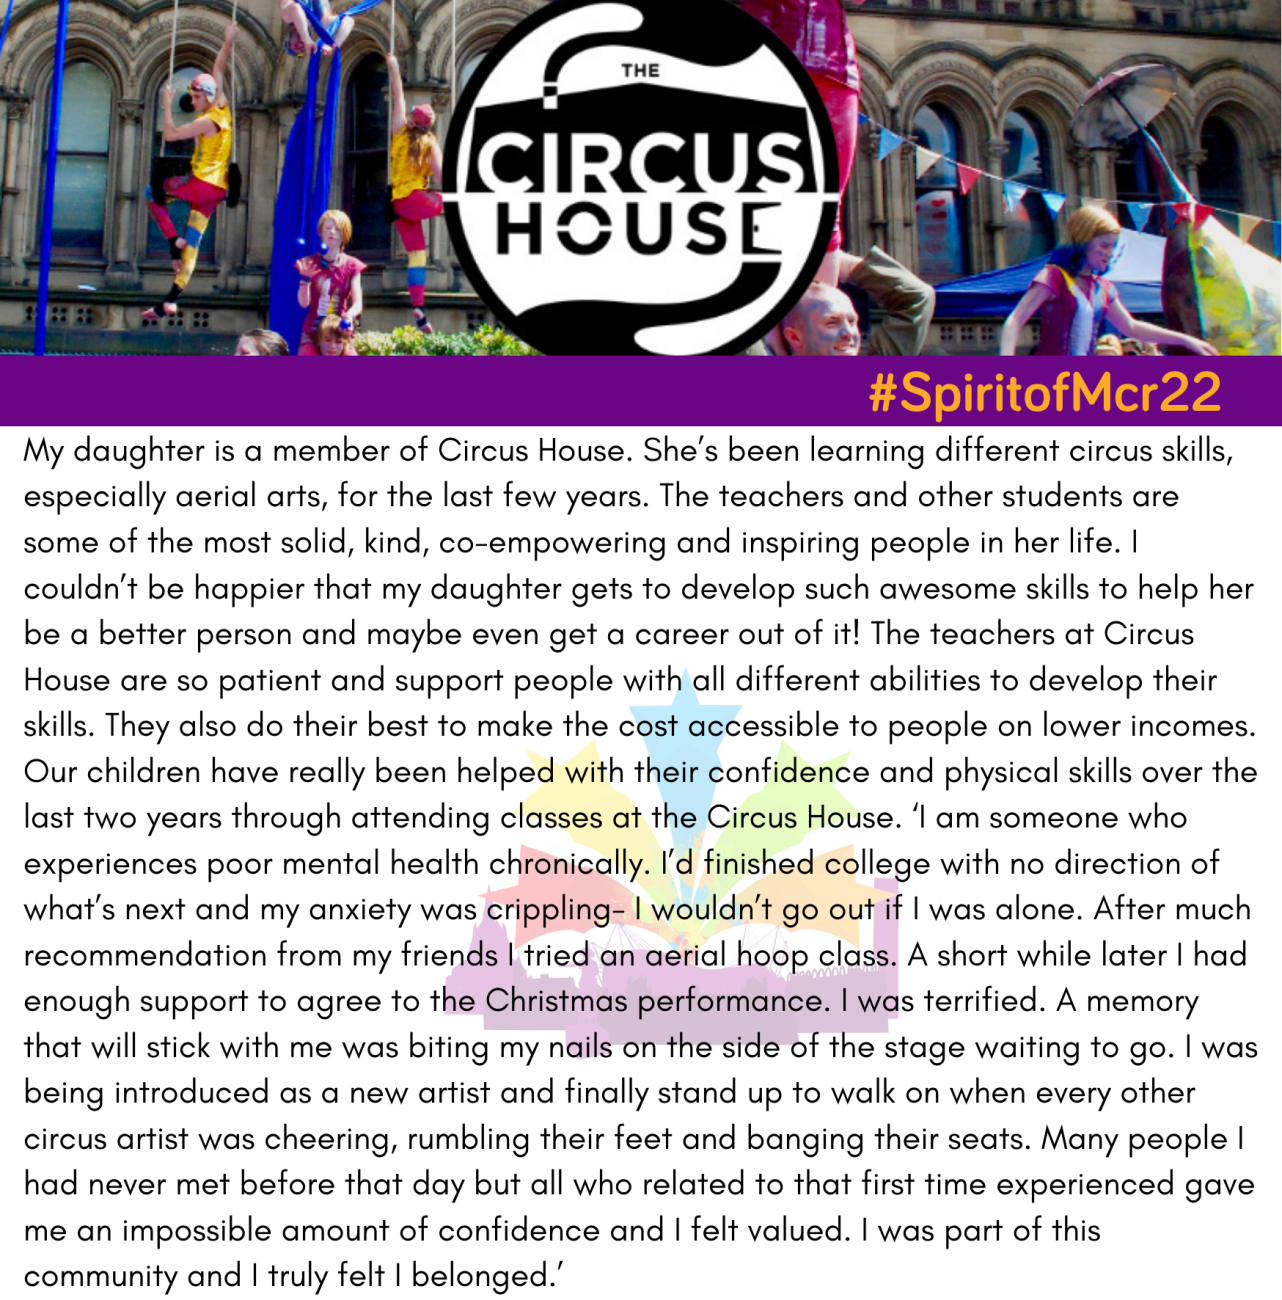 The Circus House